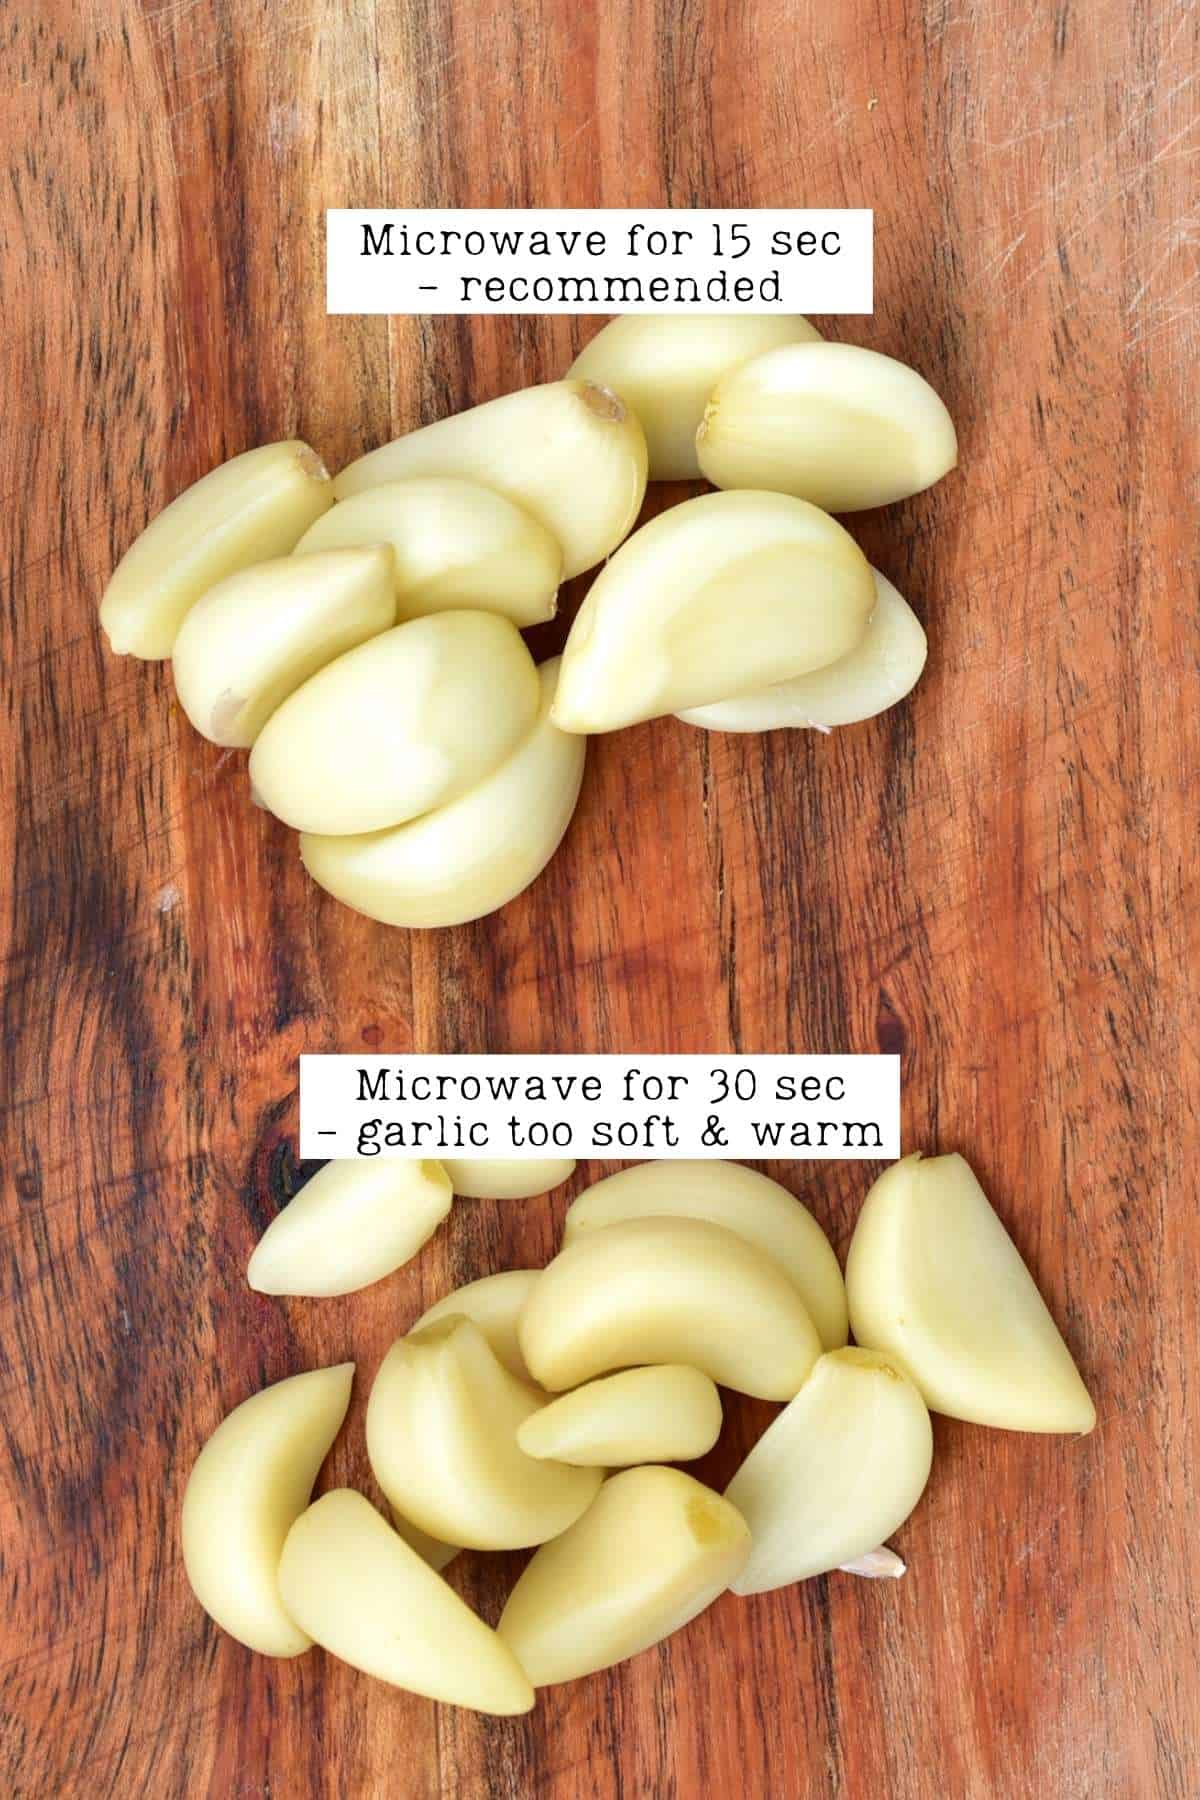 Comparing microwaved garlic